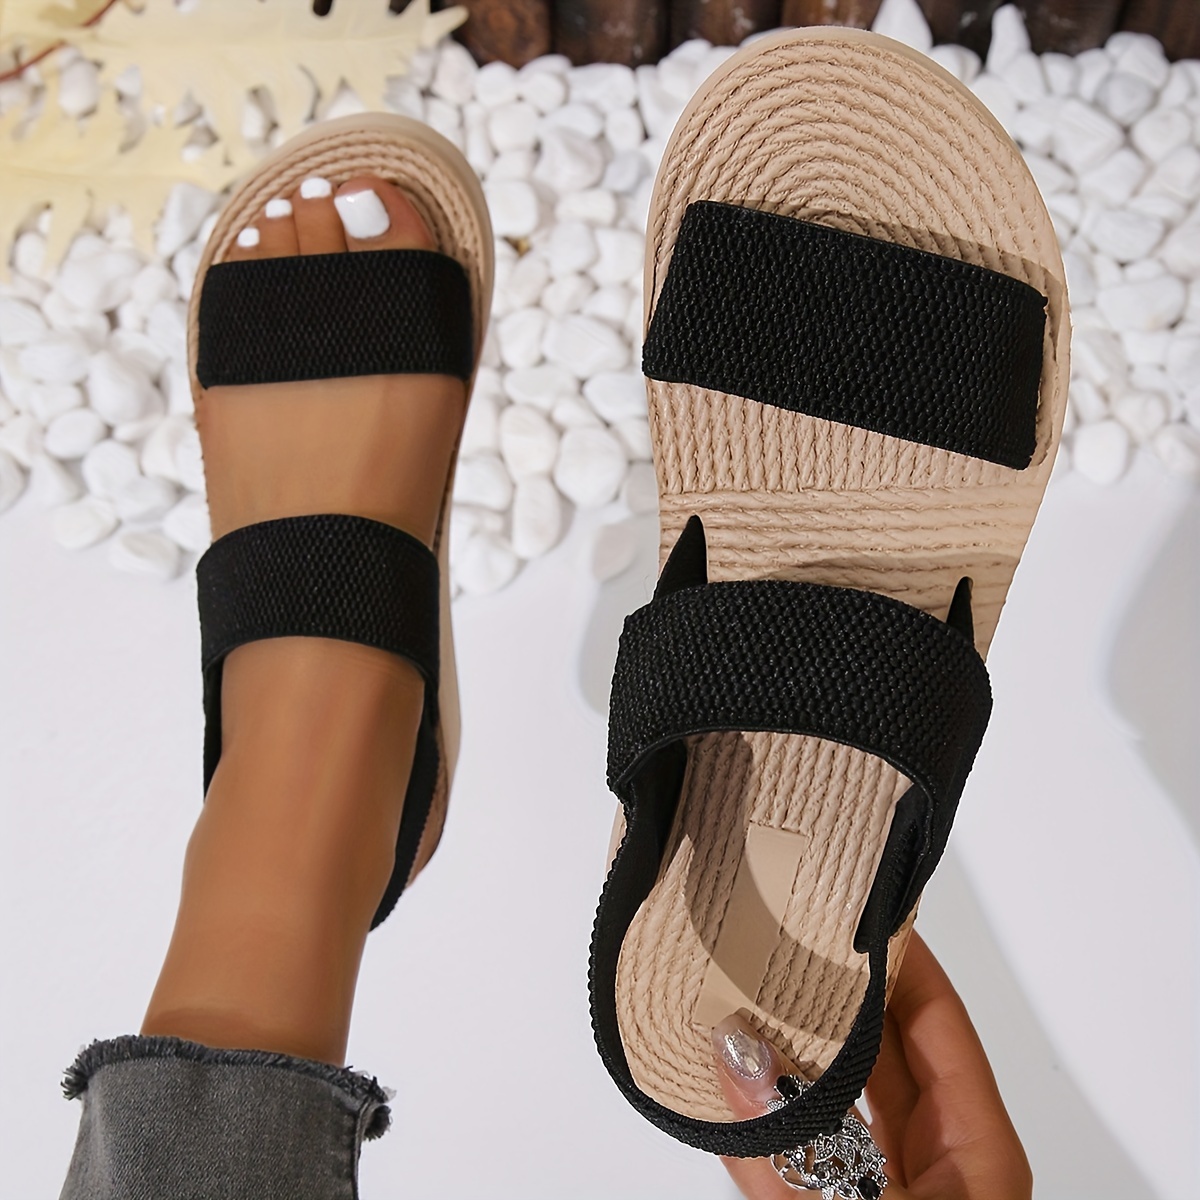 

Women's Summer Wedge Sandals, Casual Open Toe Elastic Band Slip On Shoes, Lightweight Outdoor Beach Sandals